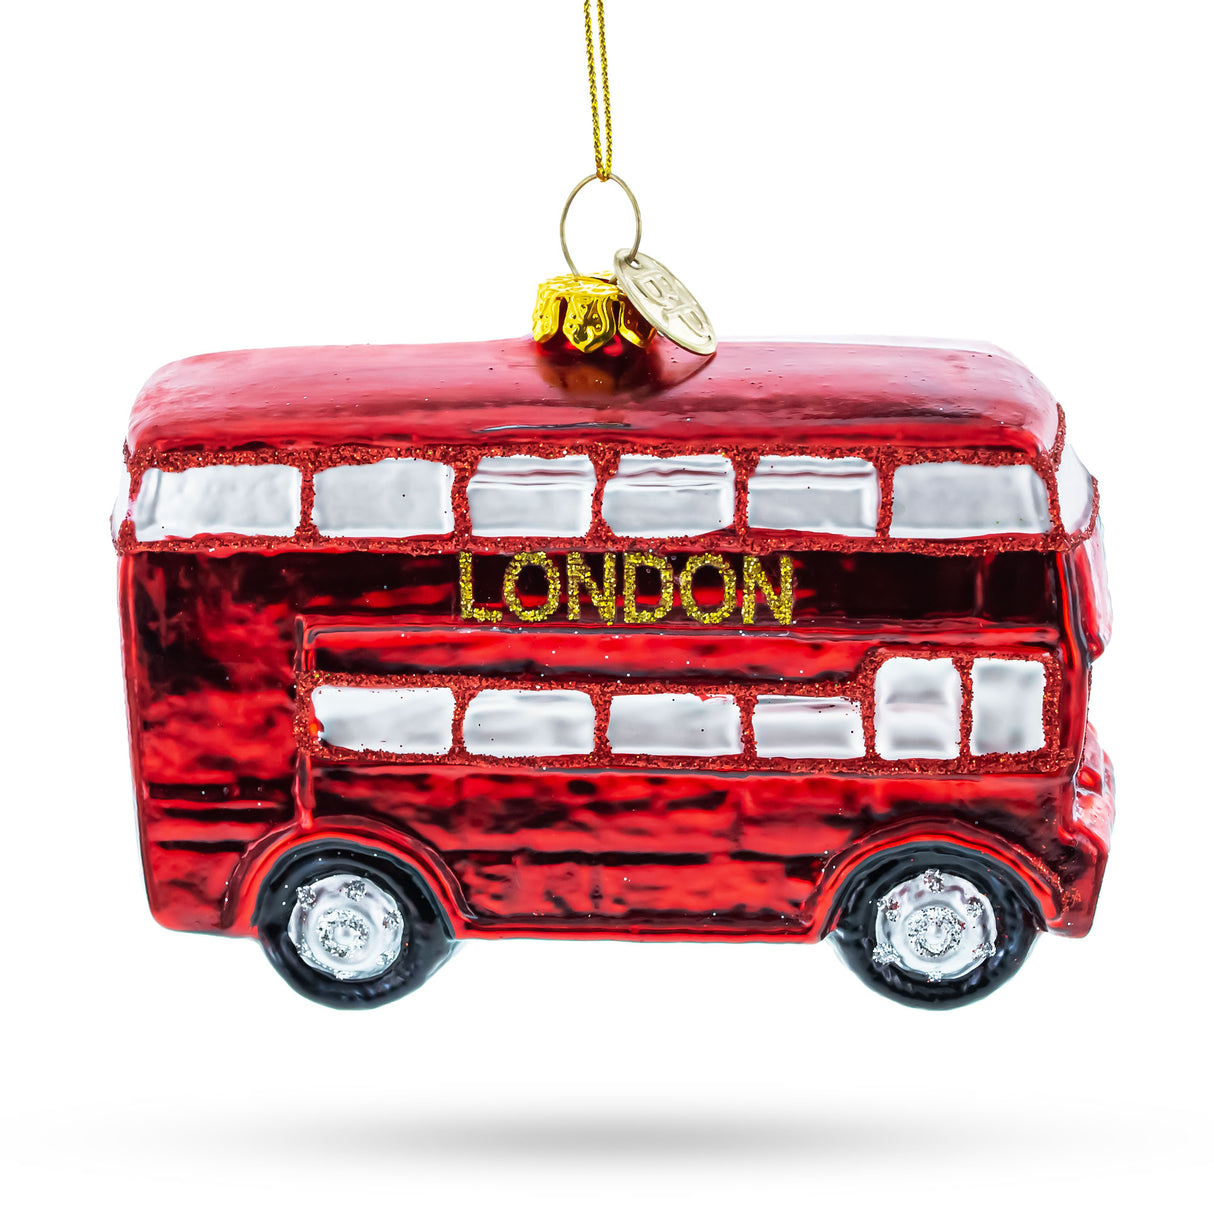 Buy Christmas Ornaments > Travel > Europe > United Kingdom by BestPysanky Online Gift Ship